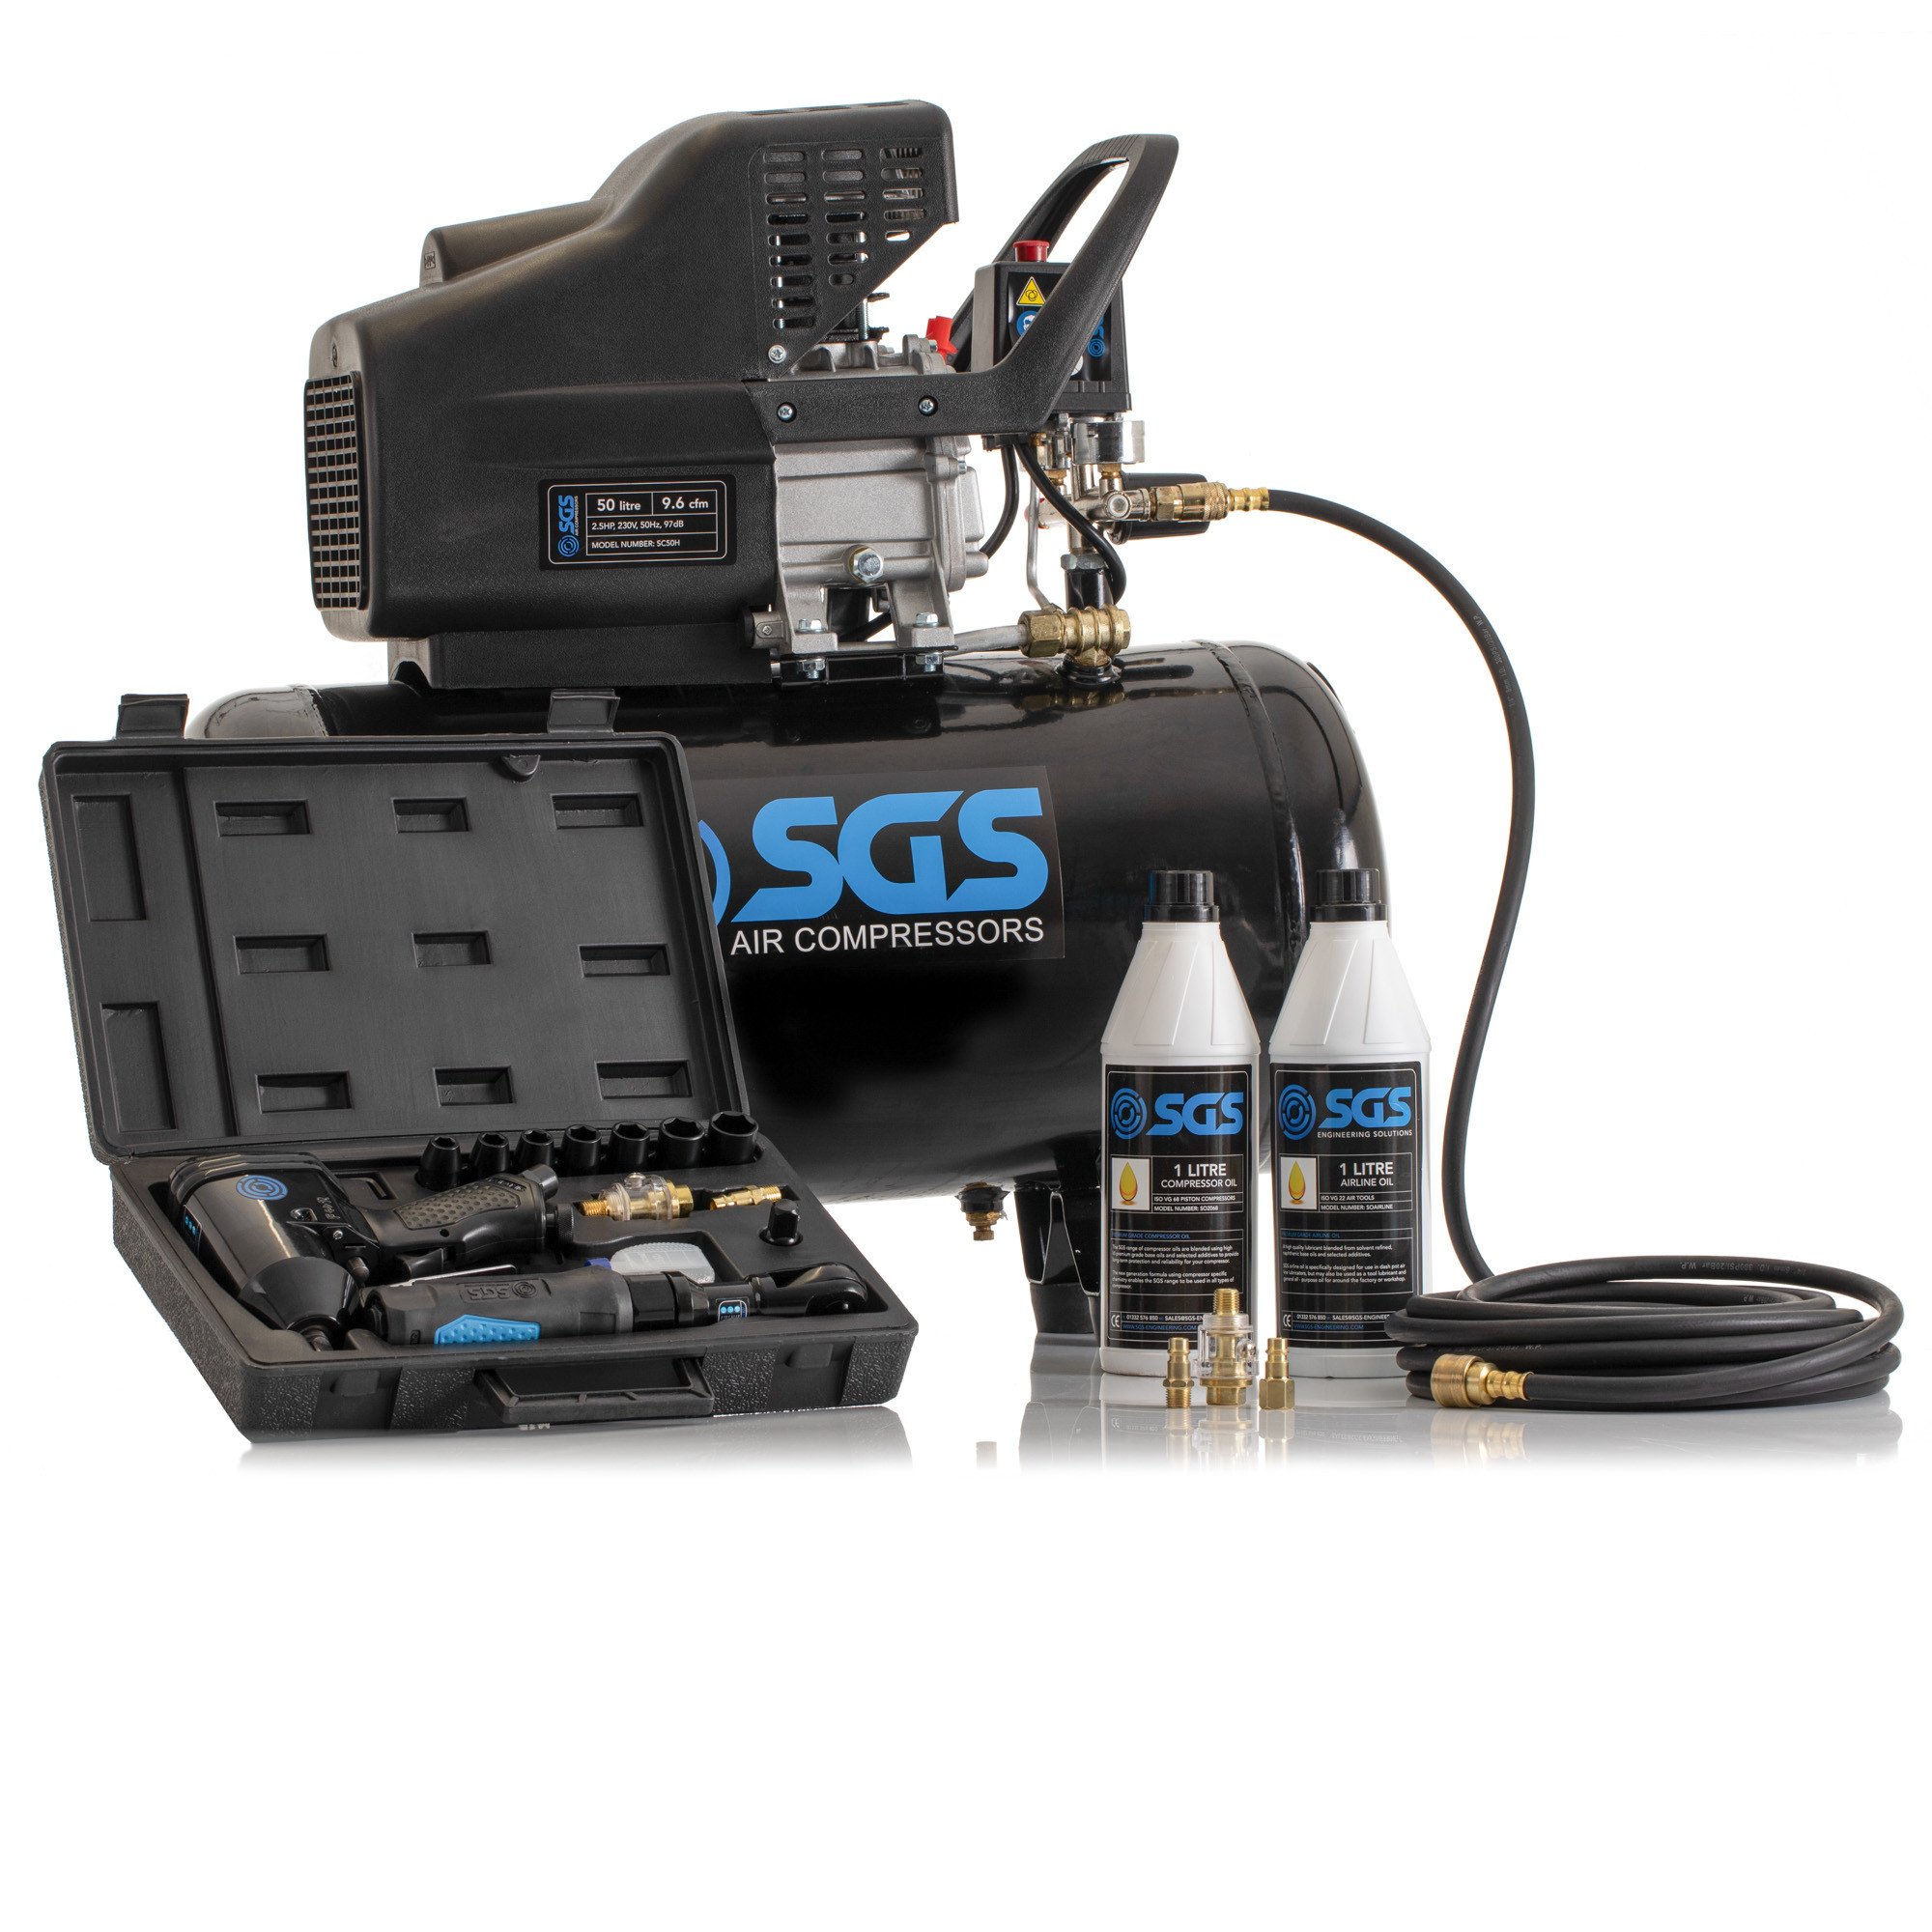 SGS 50升直接驱动空气压缩机和棘轮套件-9.6CFM 2.5HP 50L